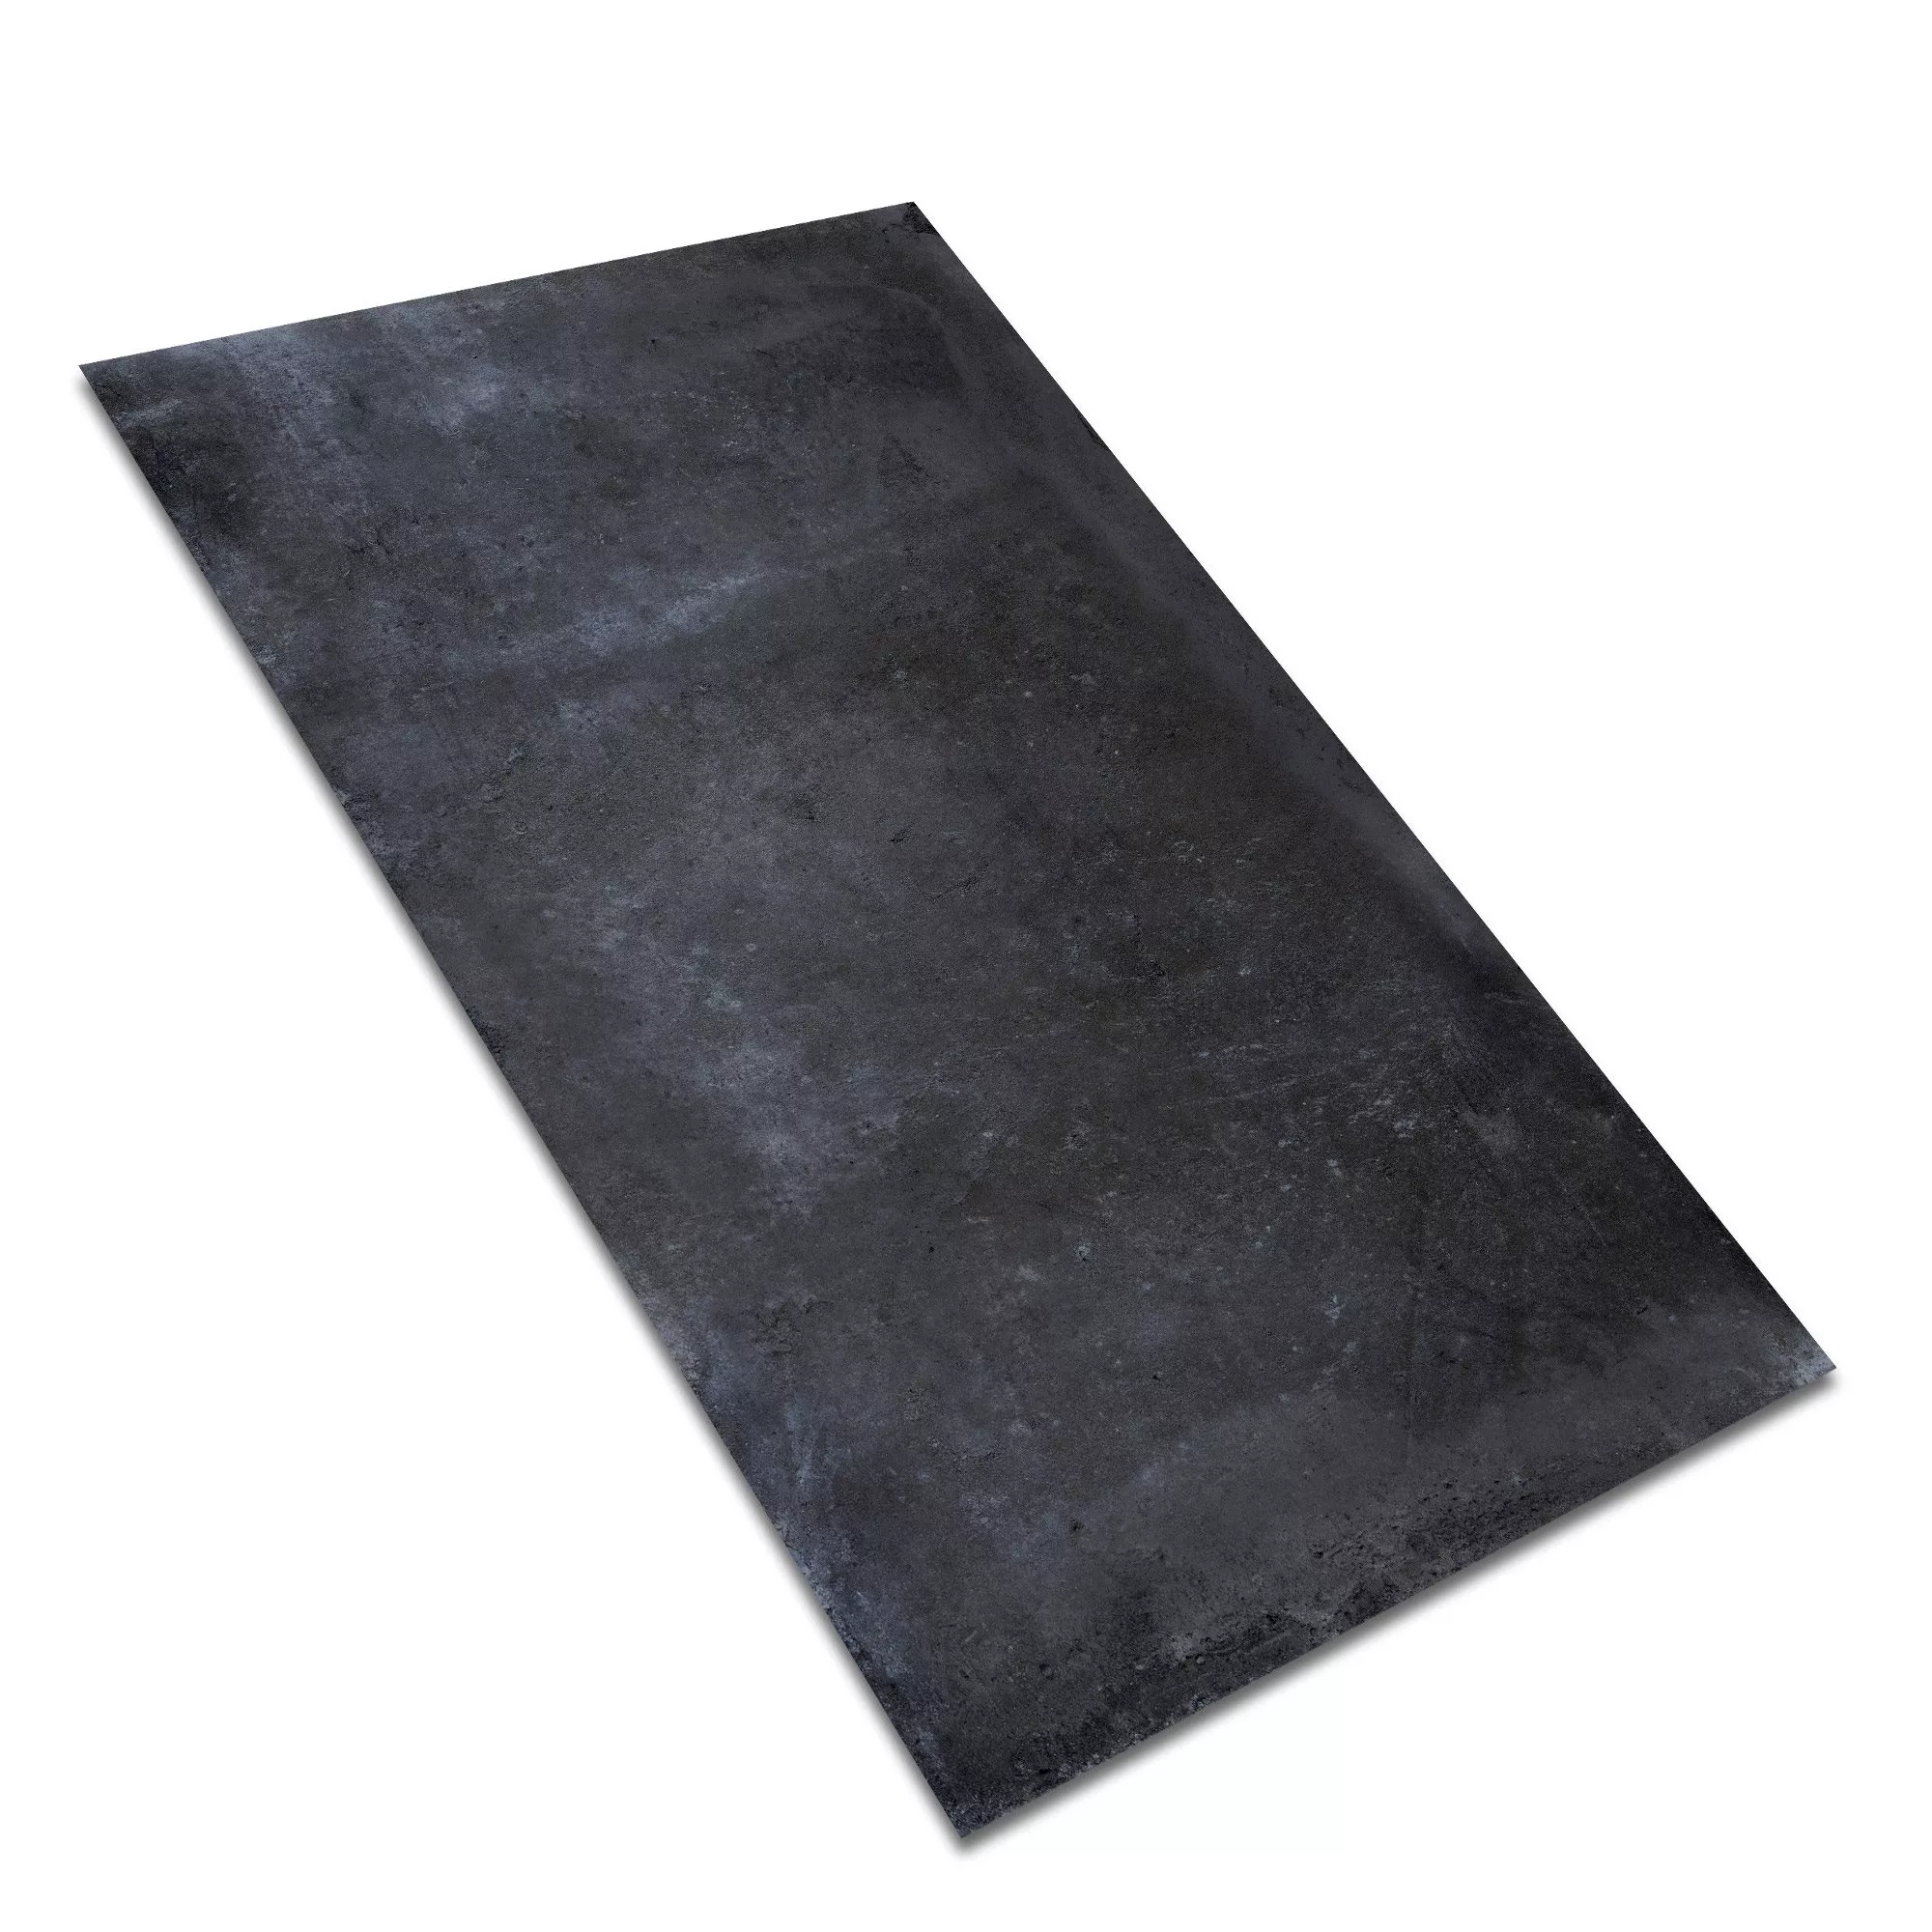 Carrelage Sol Et Mur Optique Ciment Maryland Anthracite 30x60cm